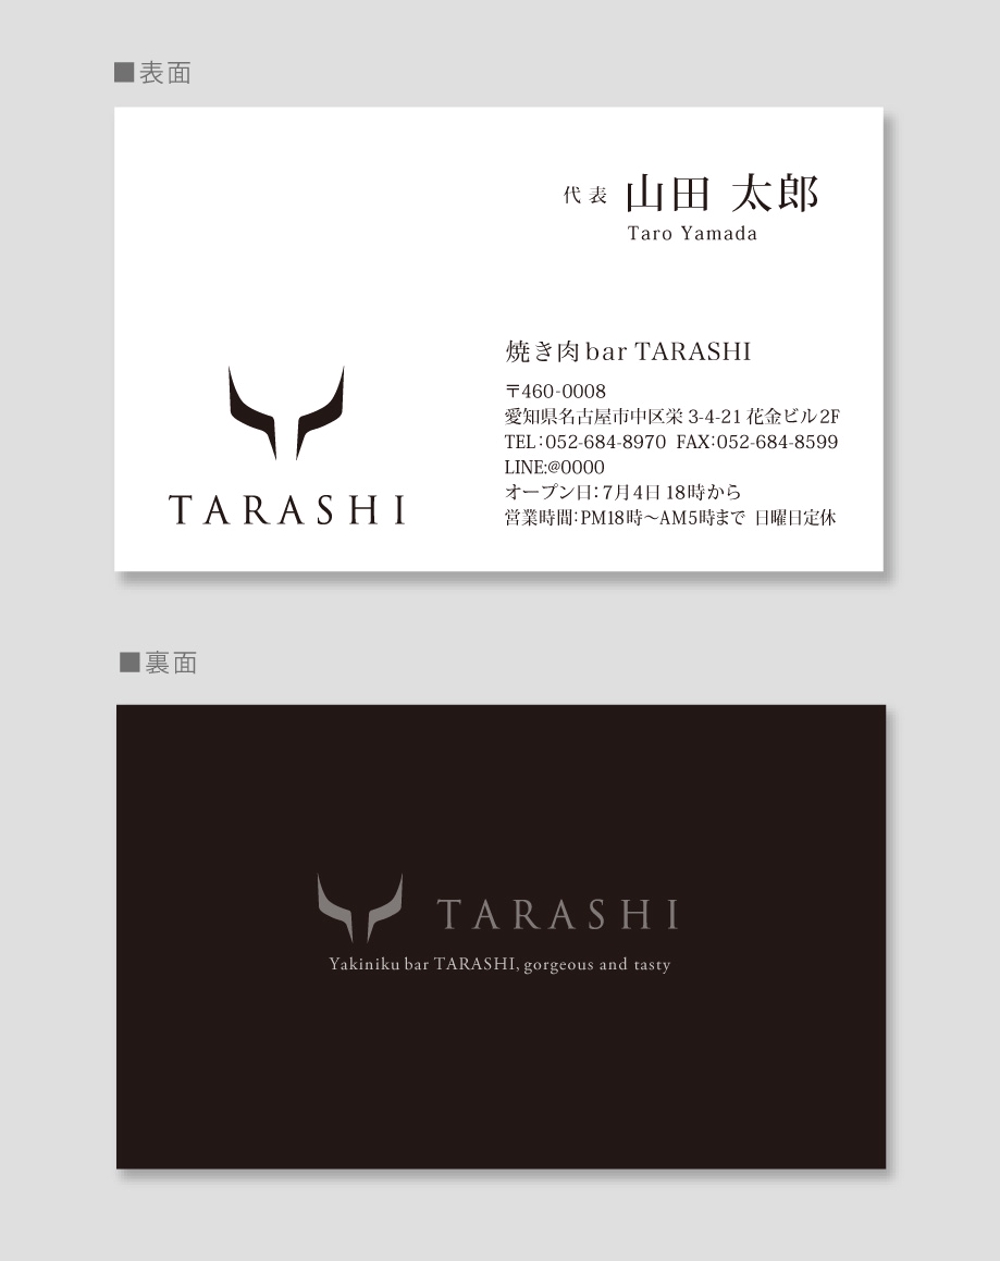 焼き肉bar TARASHI名刺1.jpg